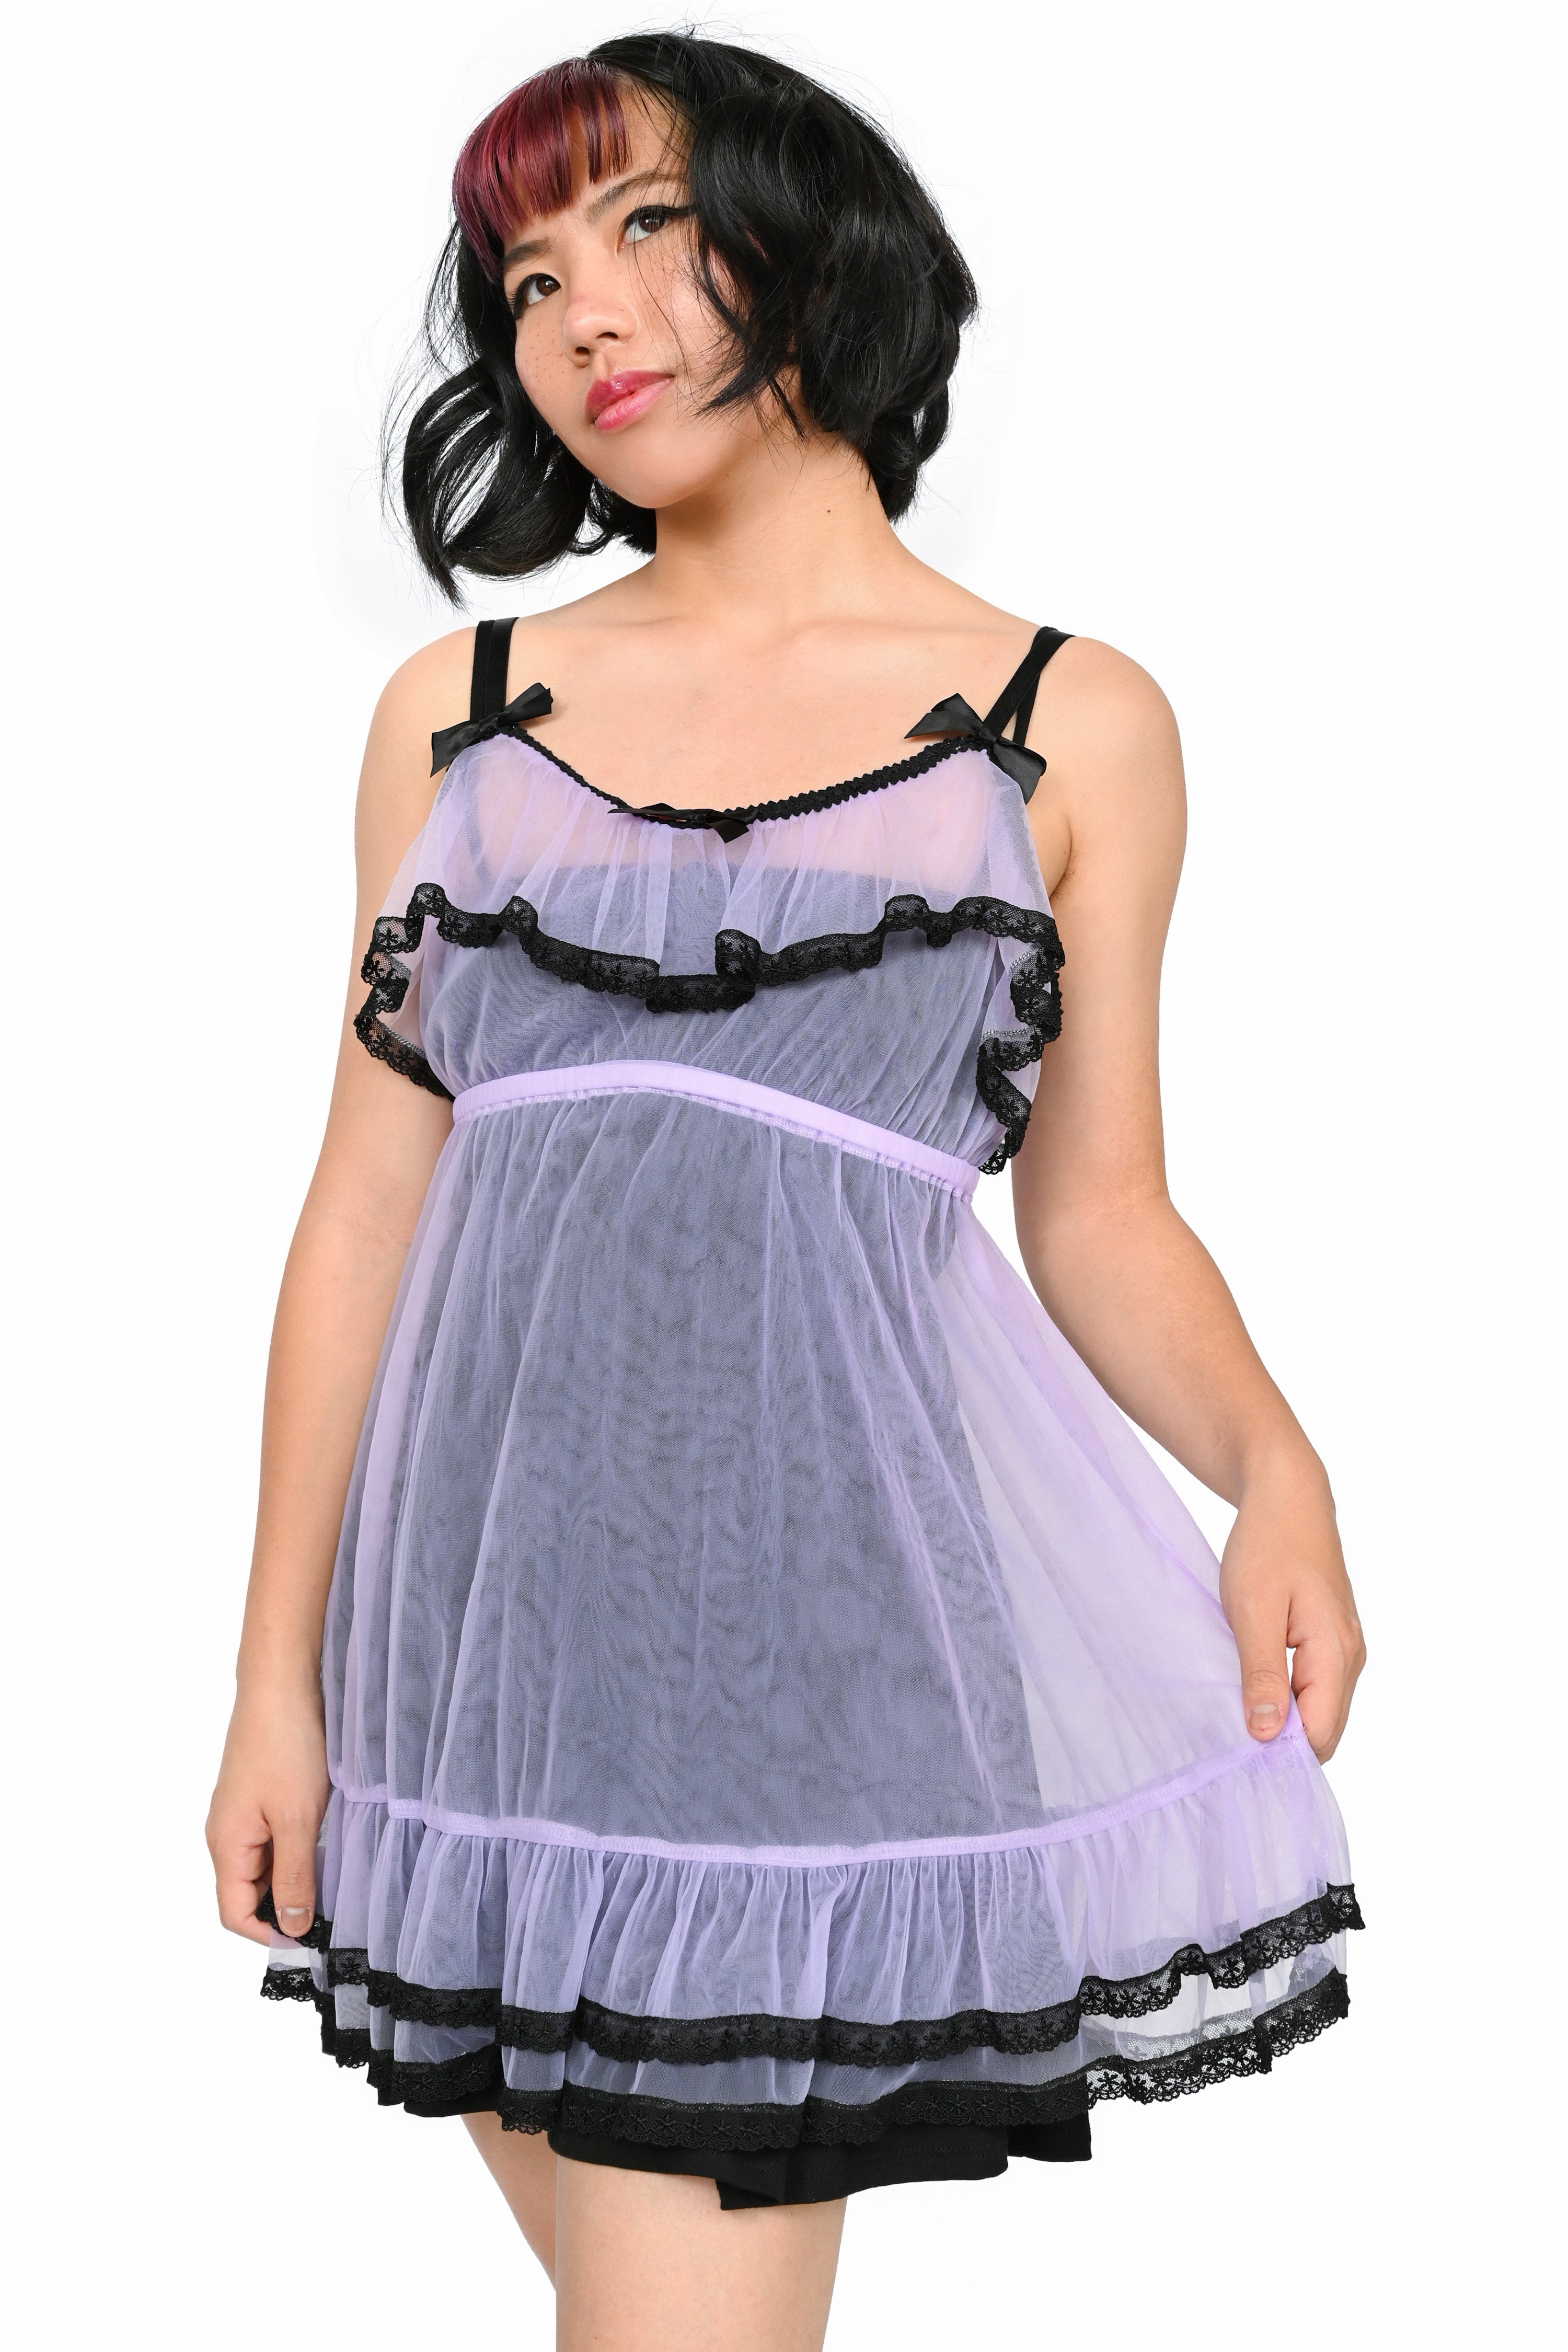 Powder Room Babydoll Dress - Lavender - XS left! Sign up for Restock Notifications!